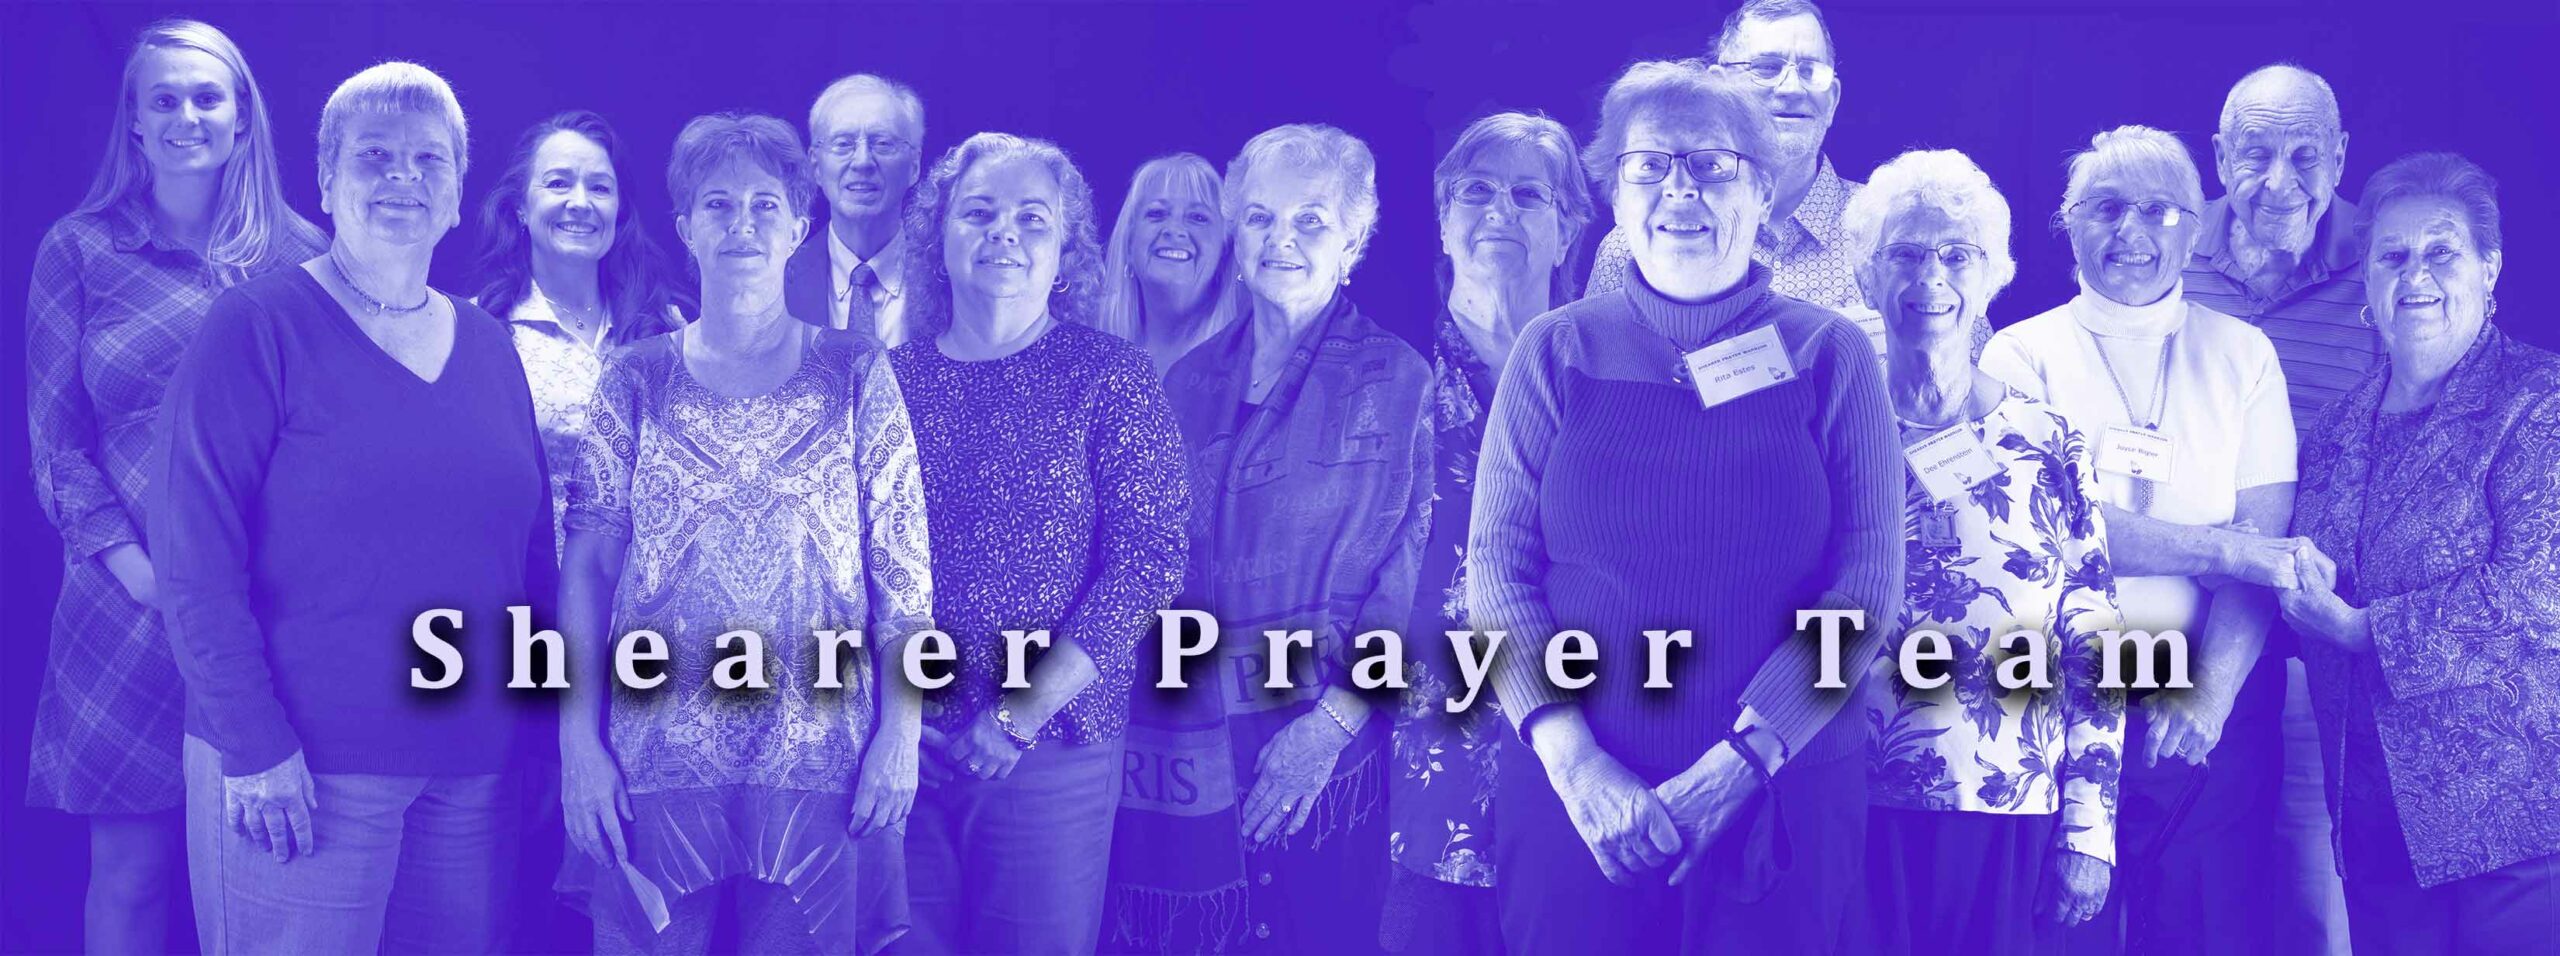 Shearer Prayer Team Photo